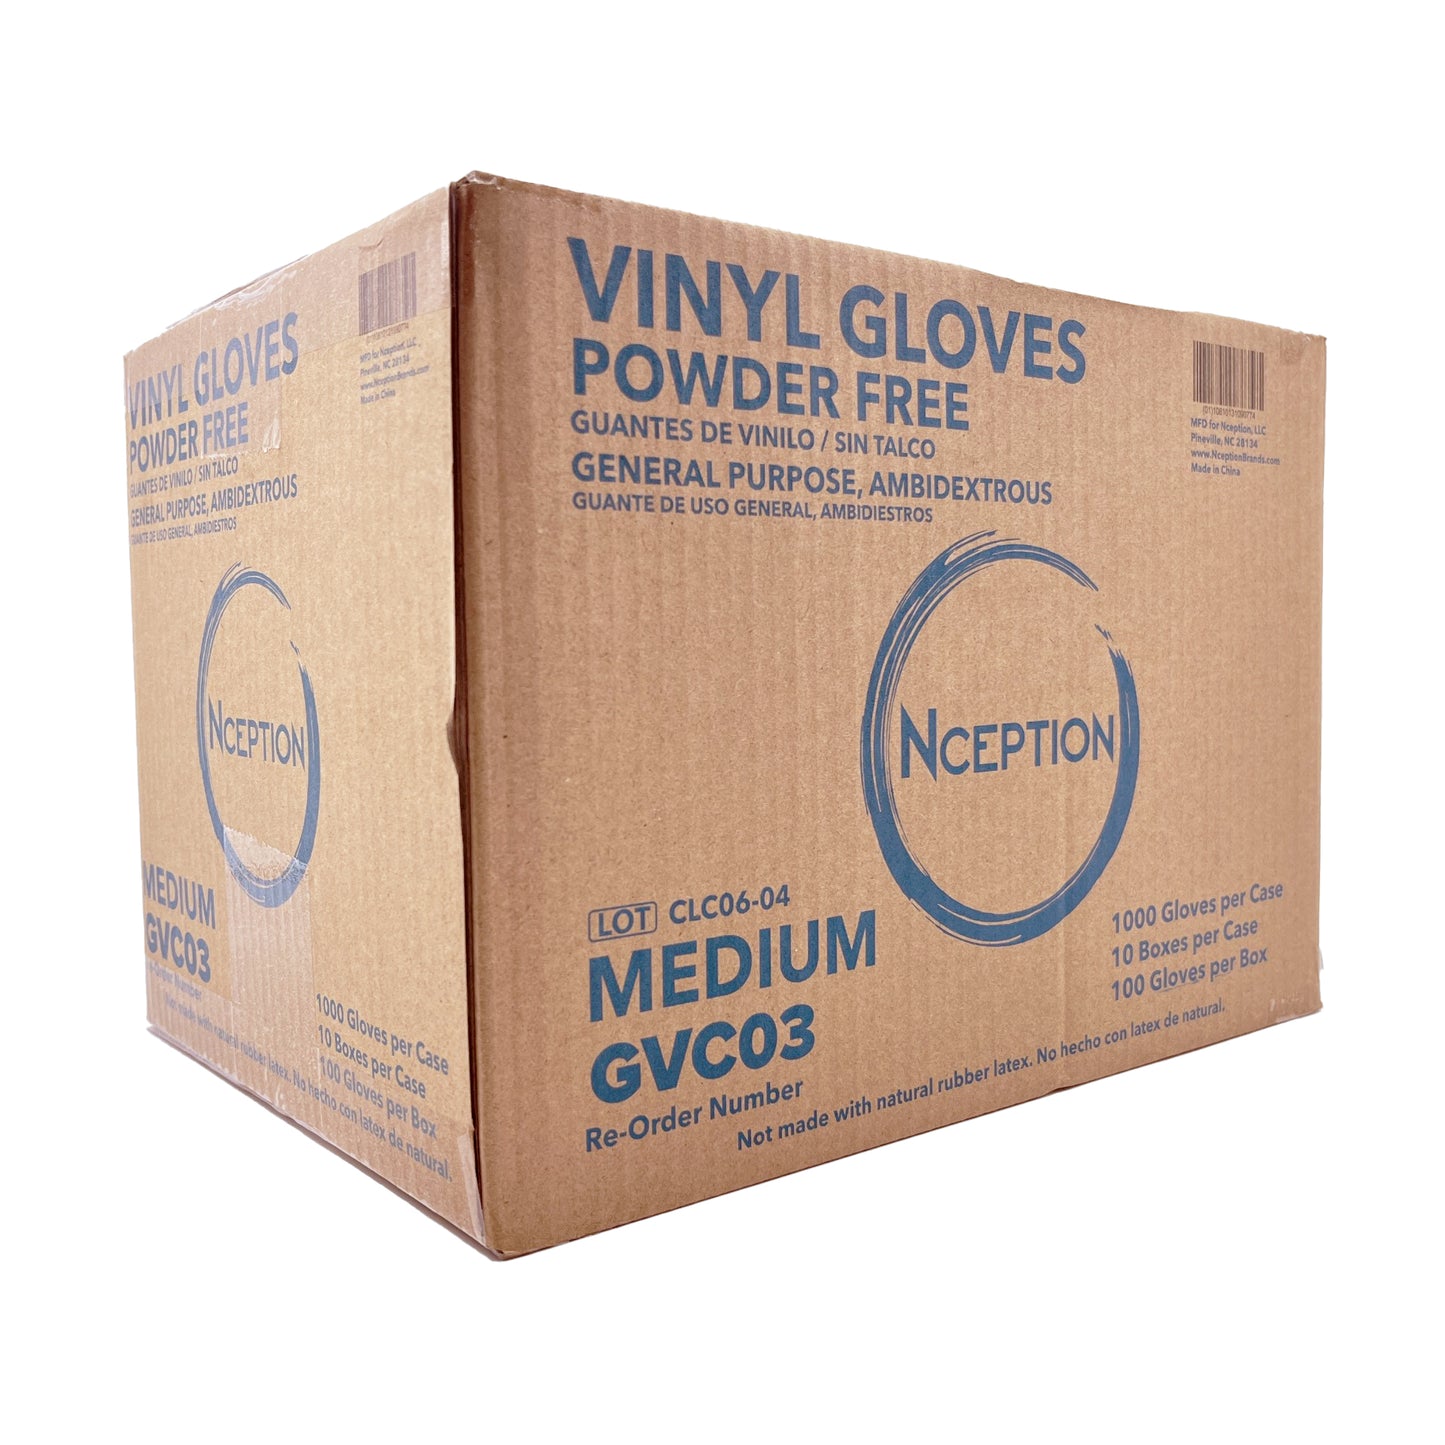 General Purpose Clear Vinyl Gloves - Powder Free